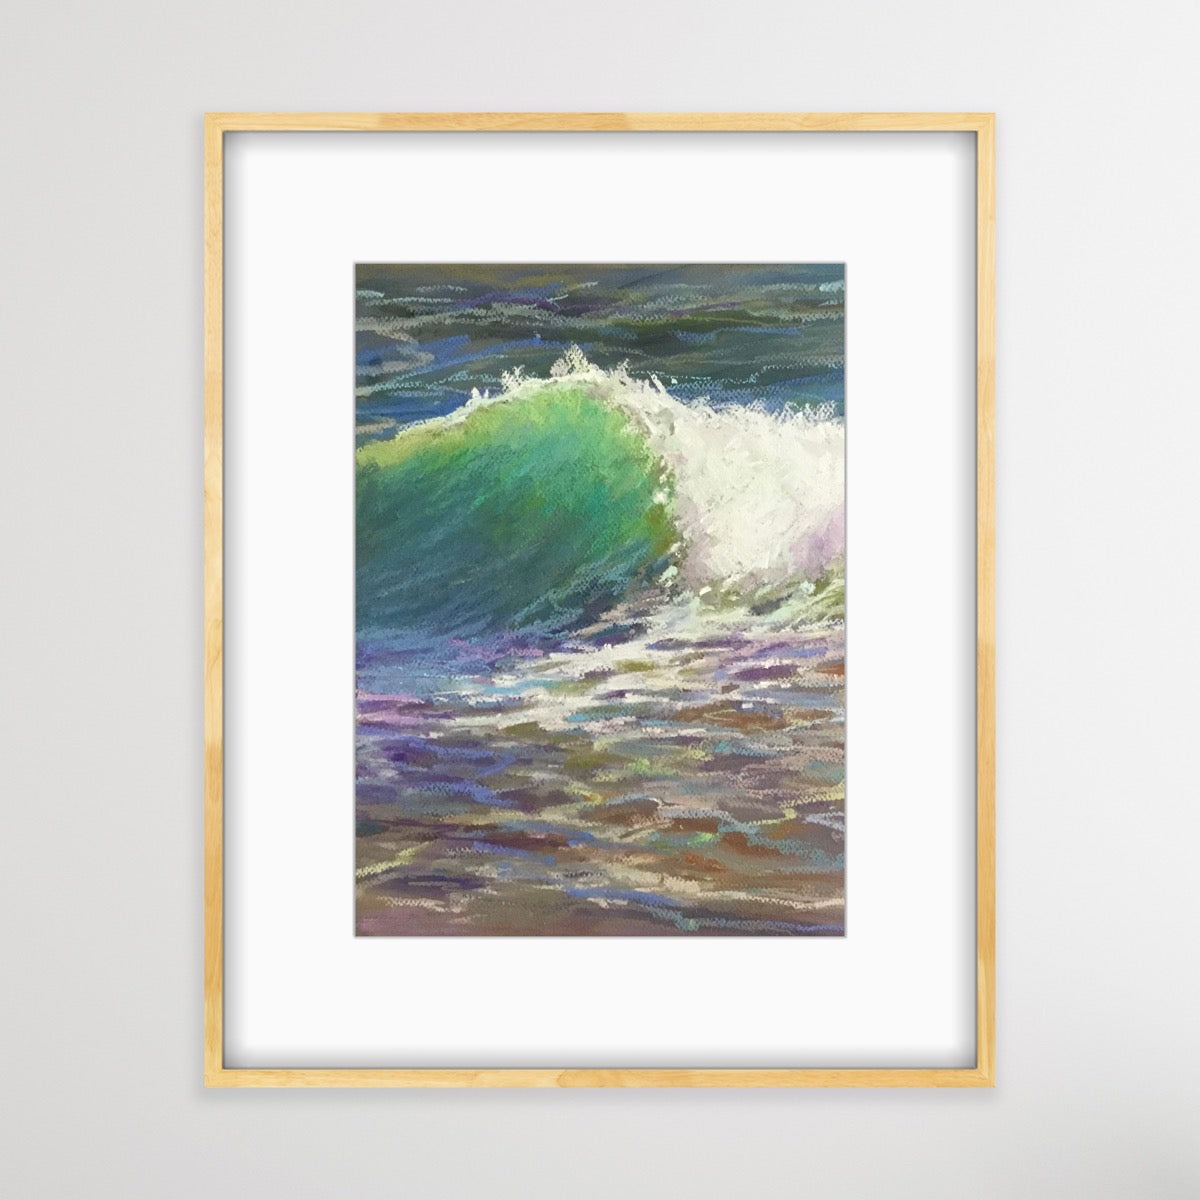 EMERALD AQUA WAVE - Giclee Reproduction Print of Original Pastel Painting